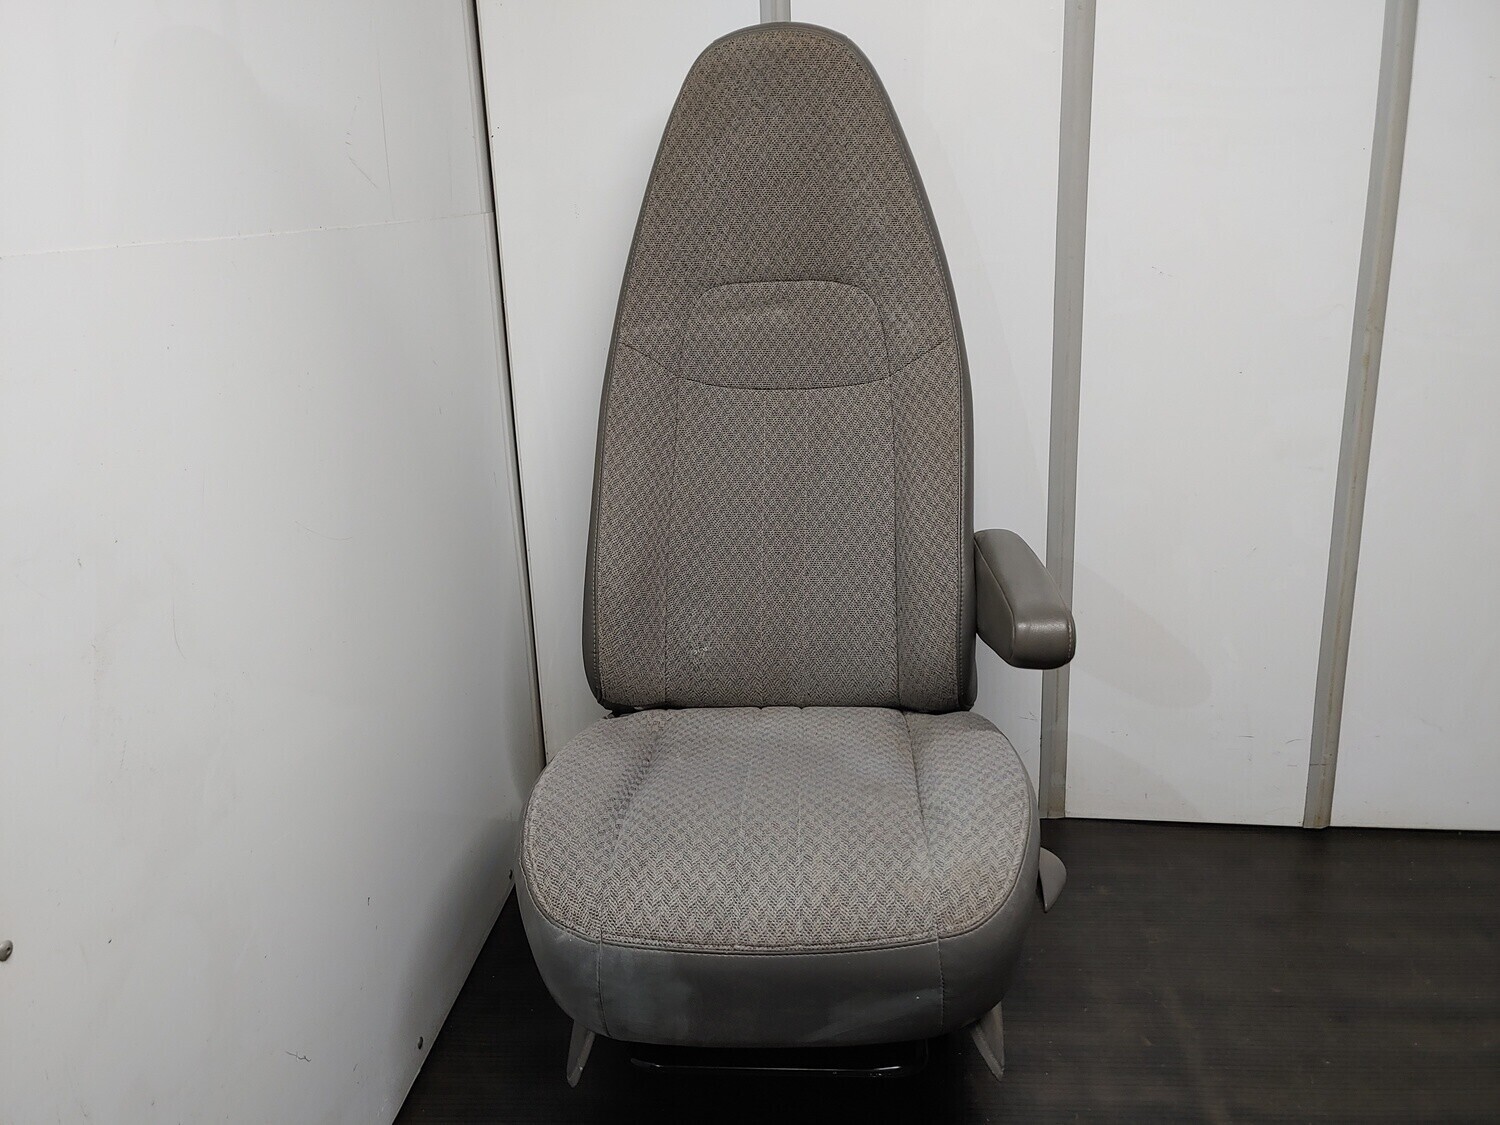 Chevy Express Passenger Seat W/ High Backrest